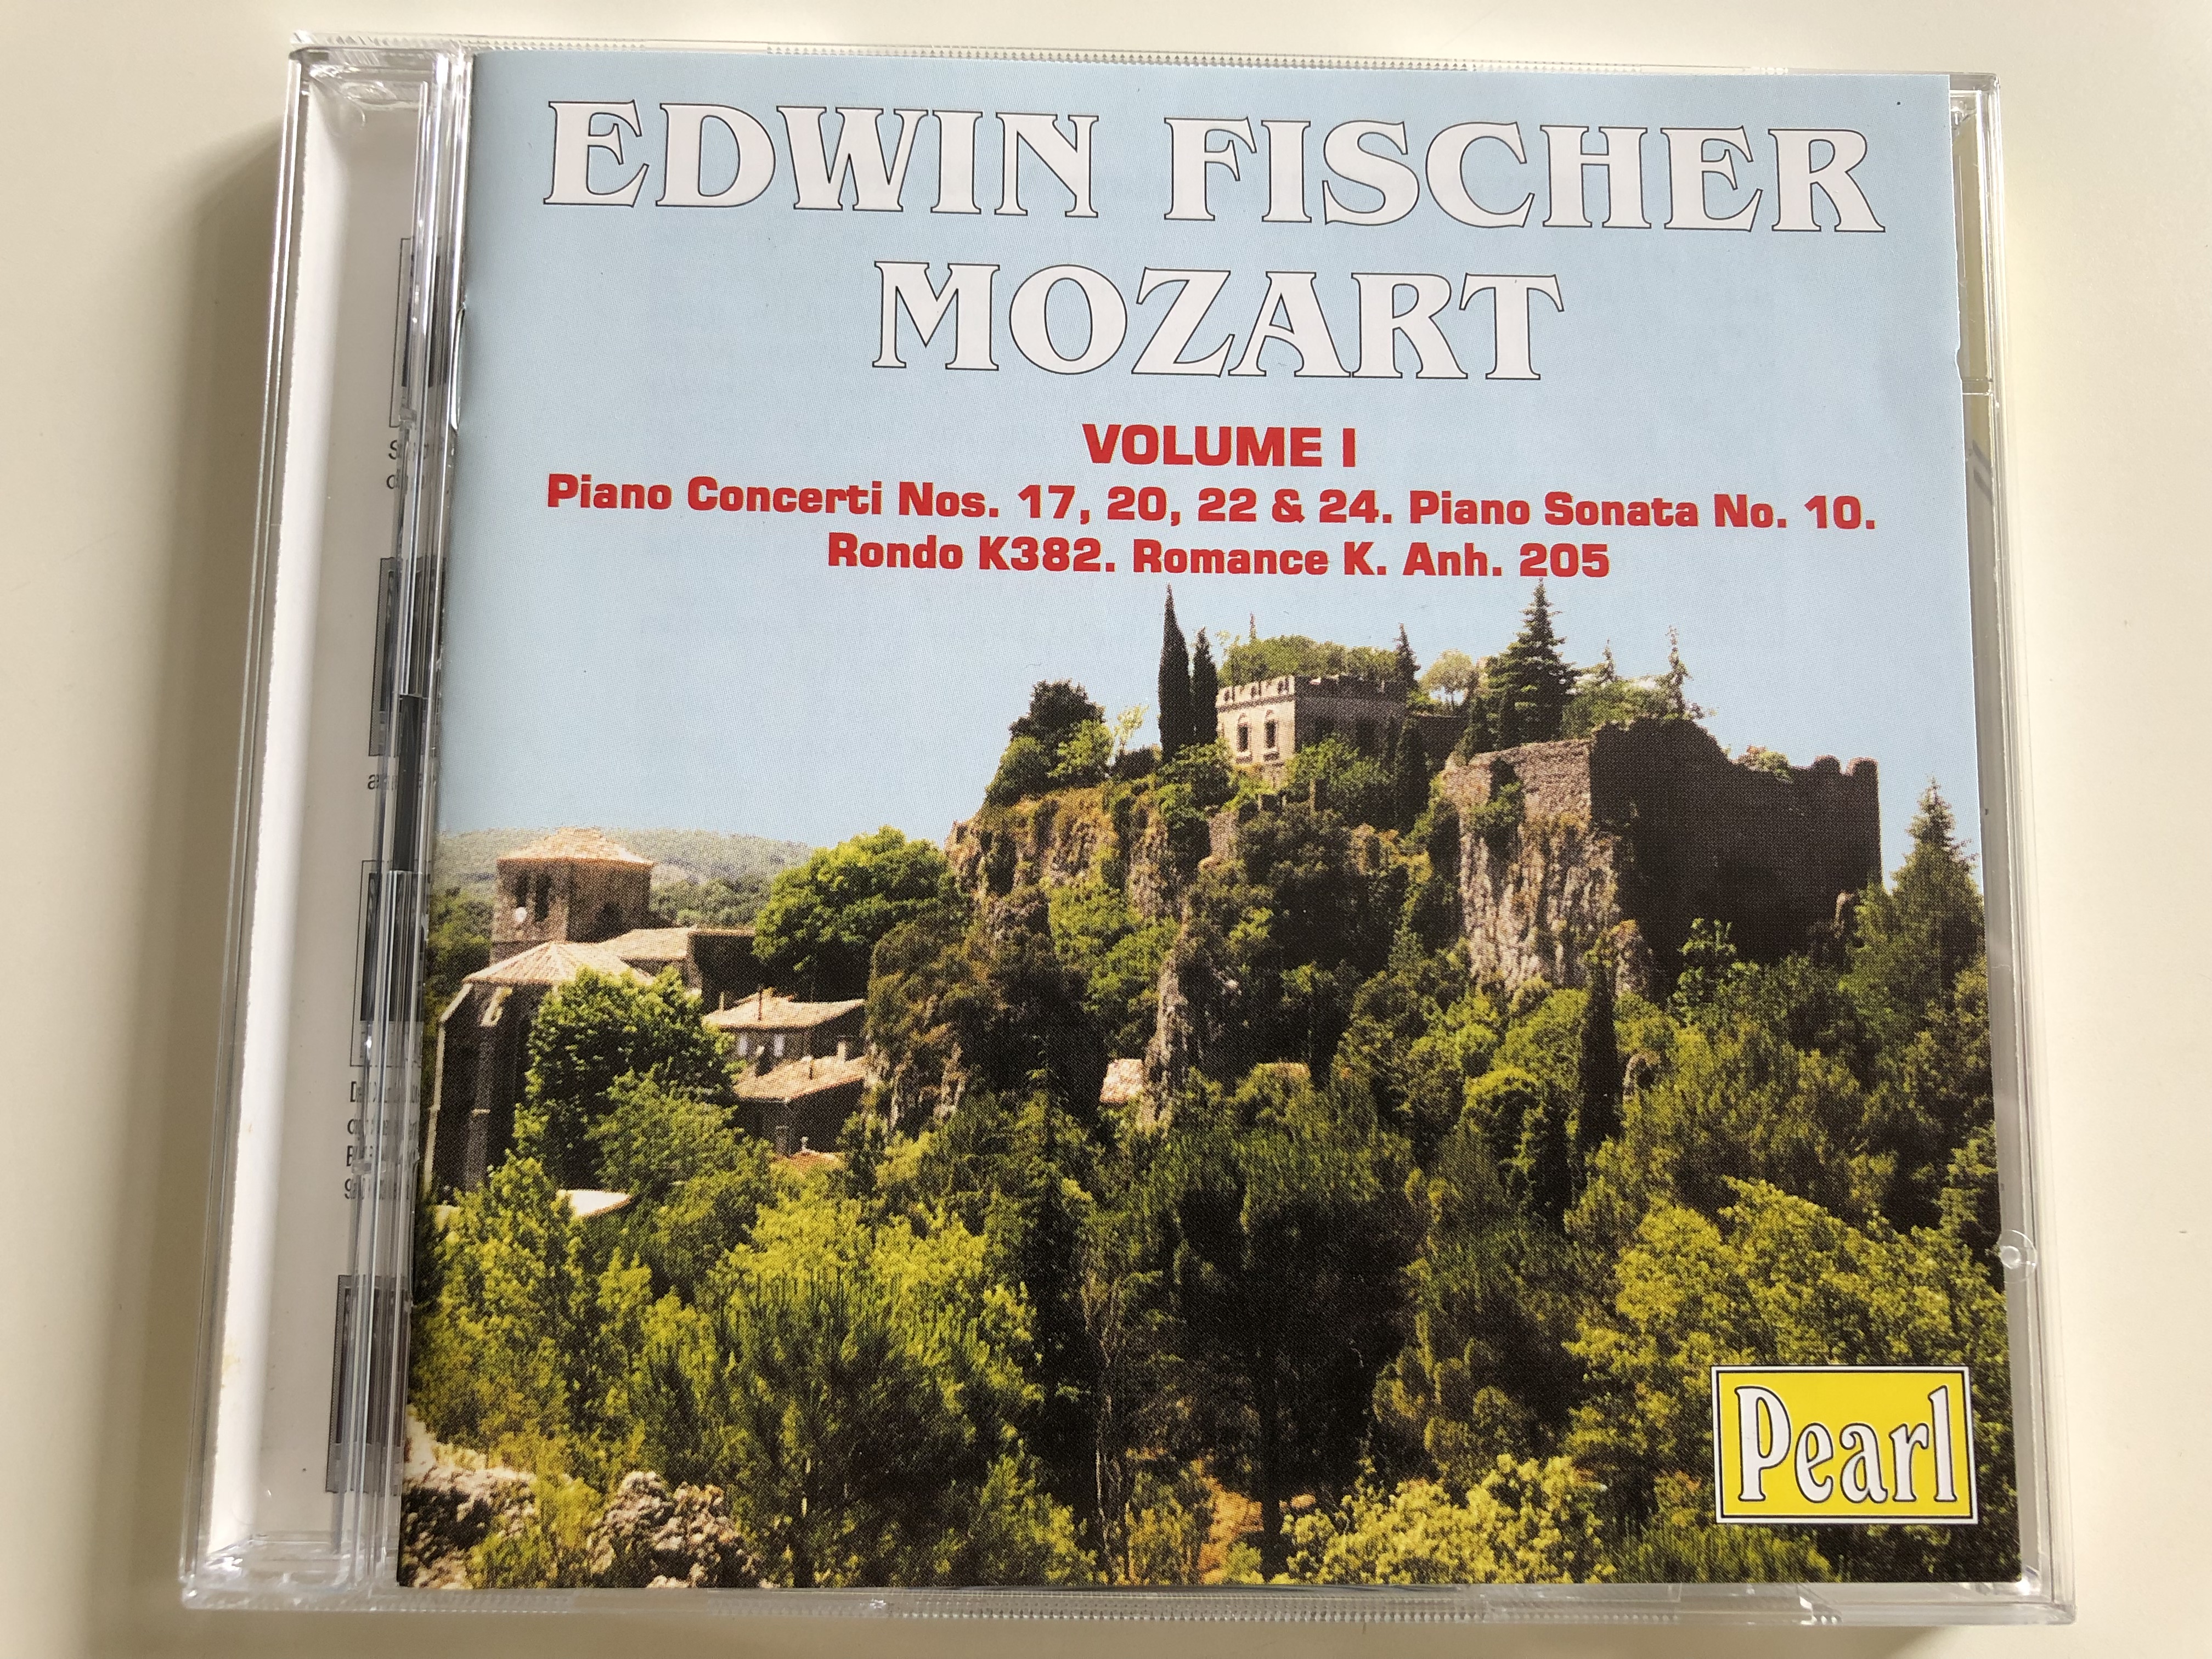 mozart-volume-i-edwin-fischer-piano-concerti-nos.-17-20-22-24-piano-sonata-no.-10-rondo-k382-romance-k.-anh.-205-pearl-audio-cd-1999-gems-0042-2-cd-1-.jpg